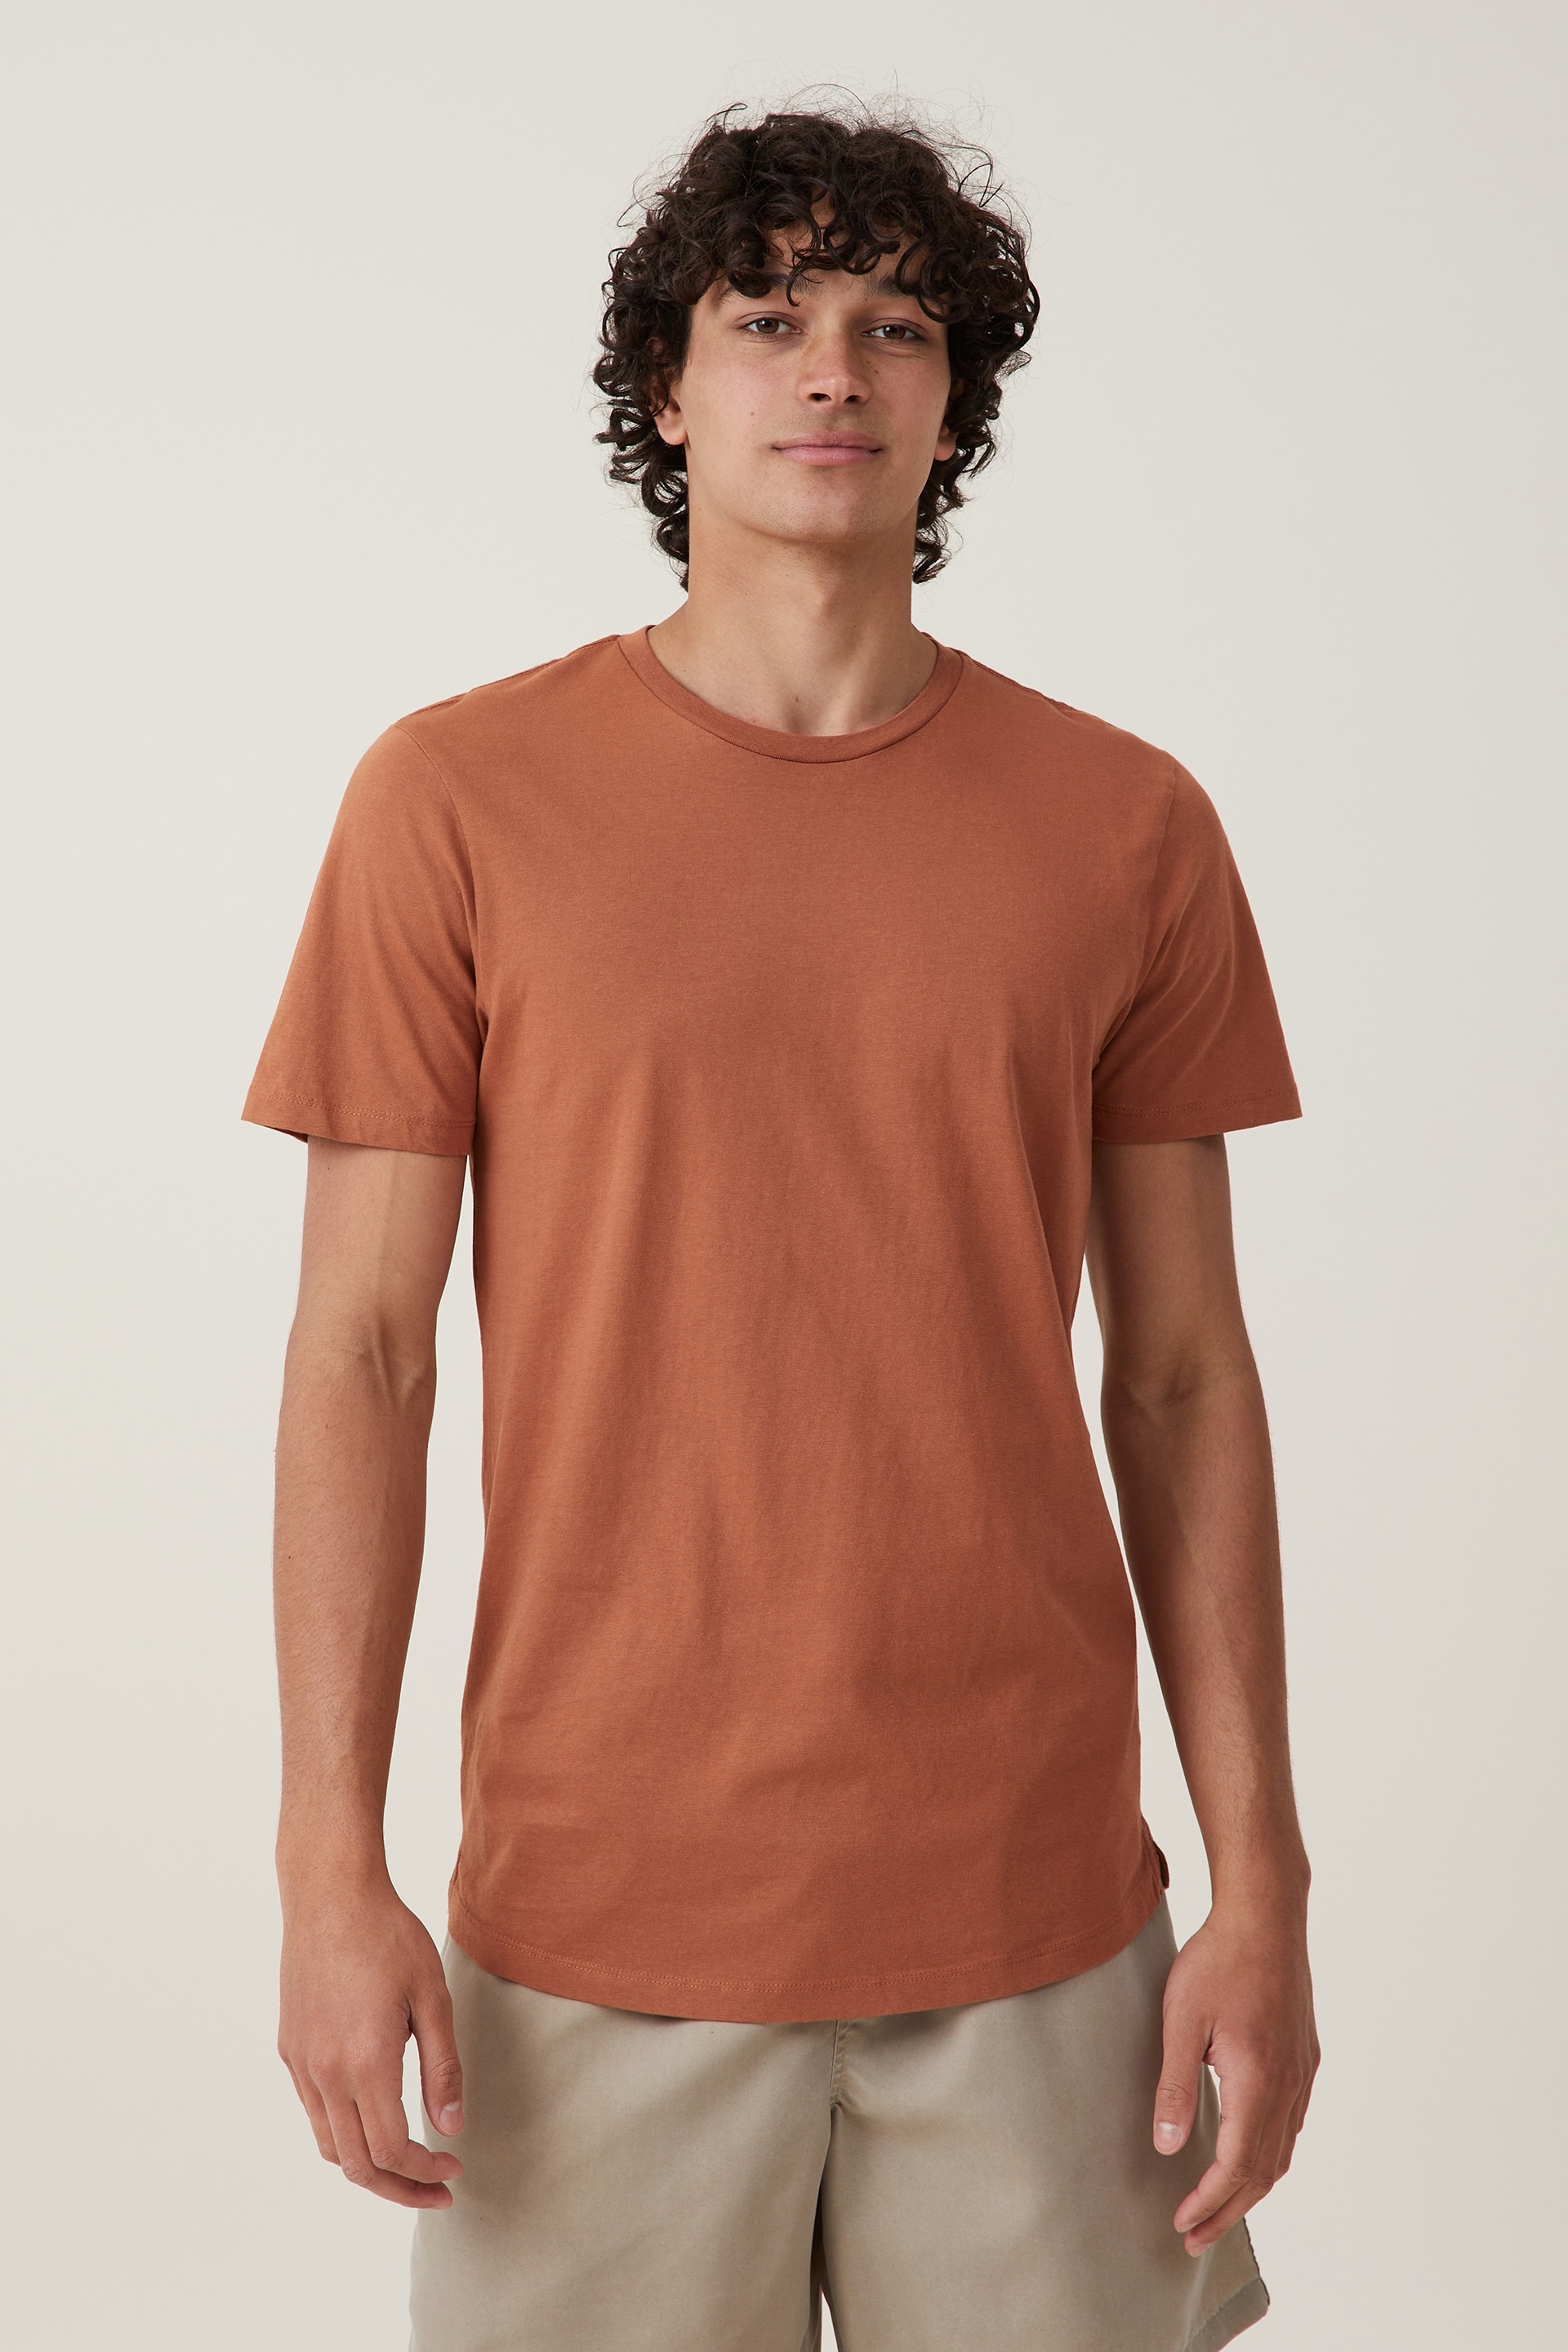 Cotton On Men - Organic Longline T-Shirt - Terracotta